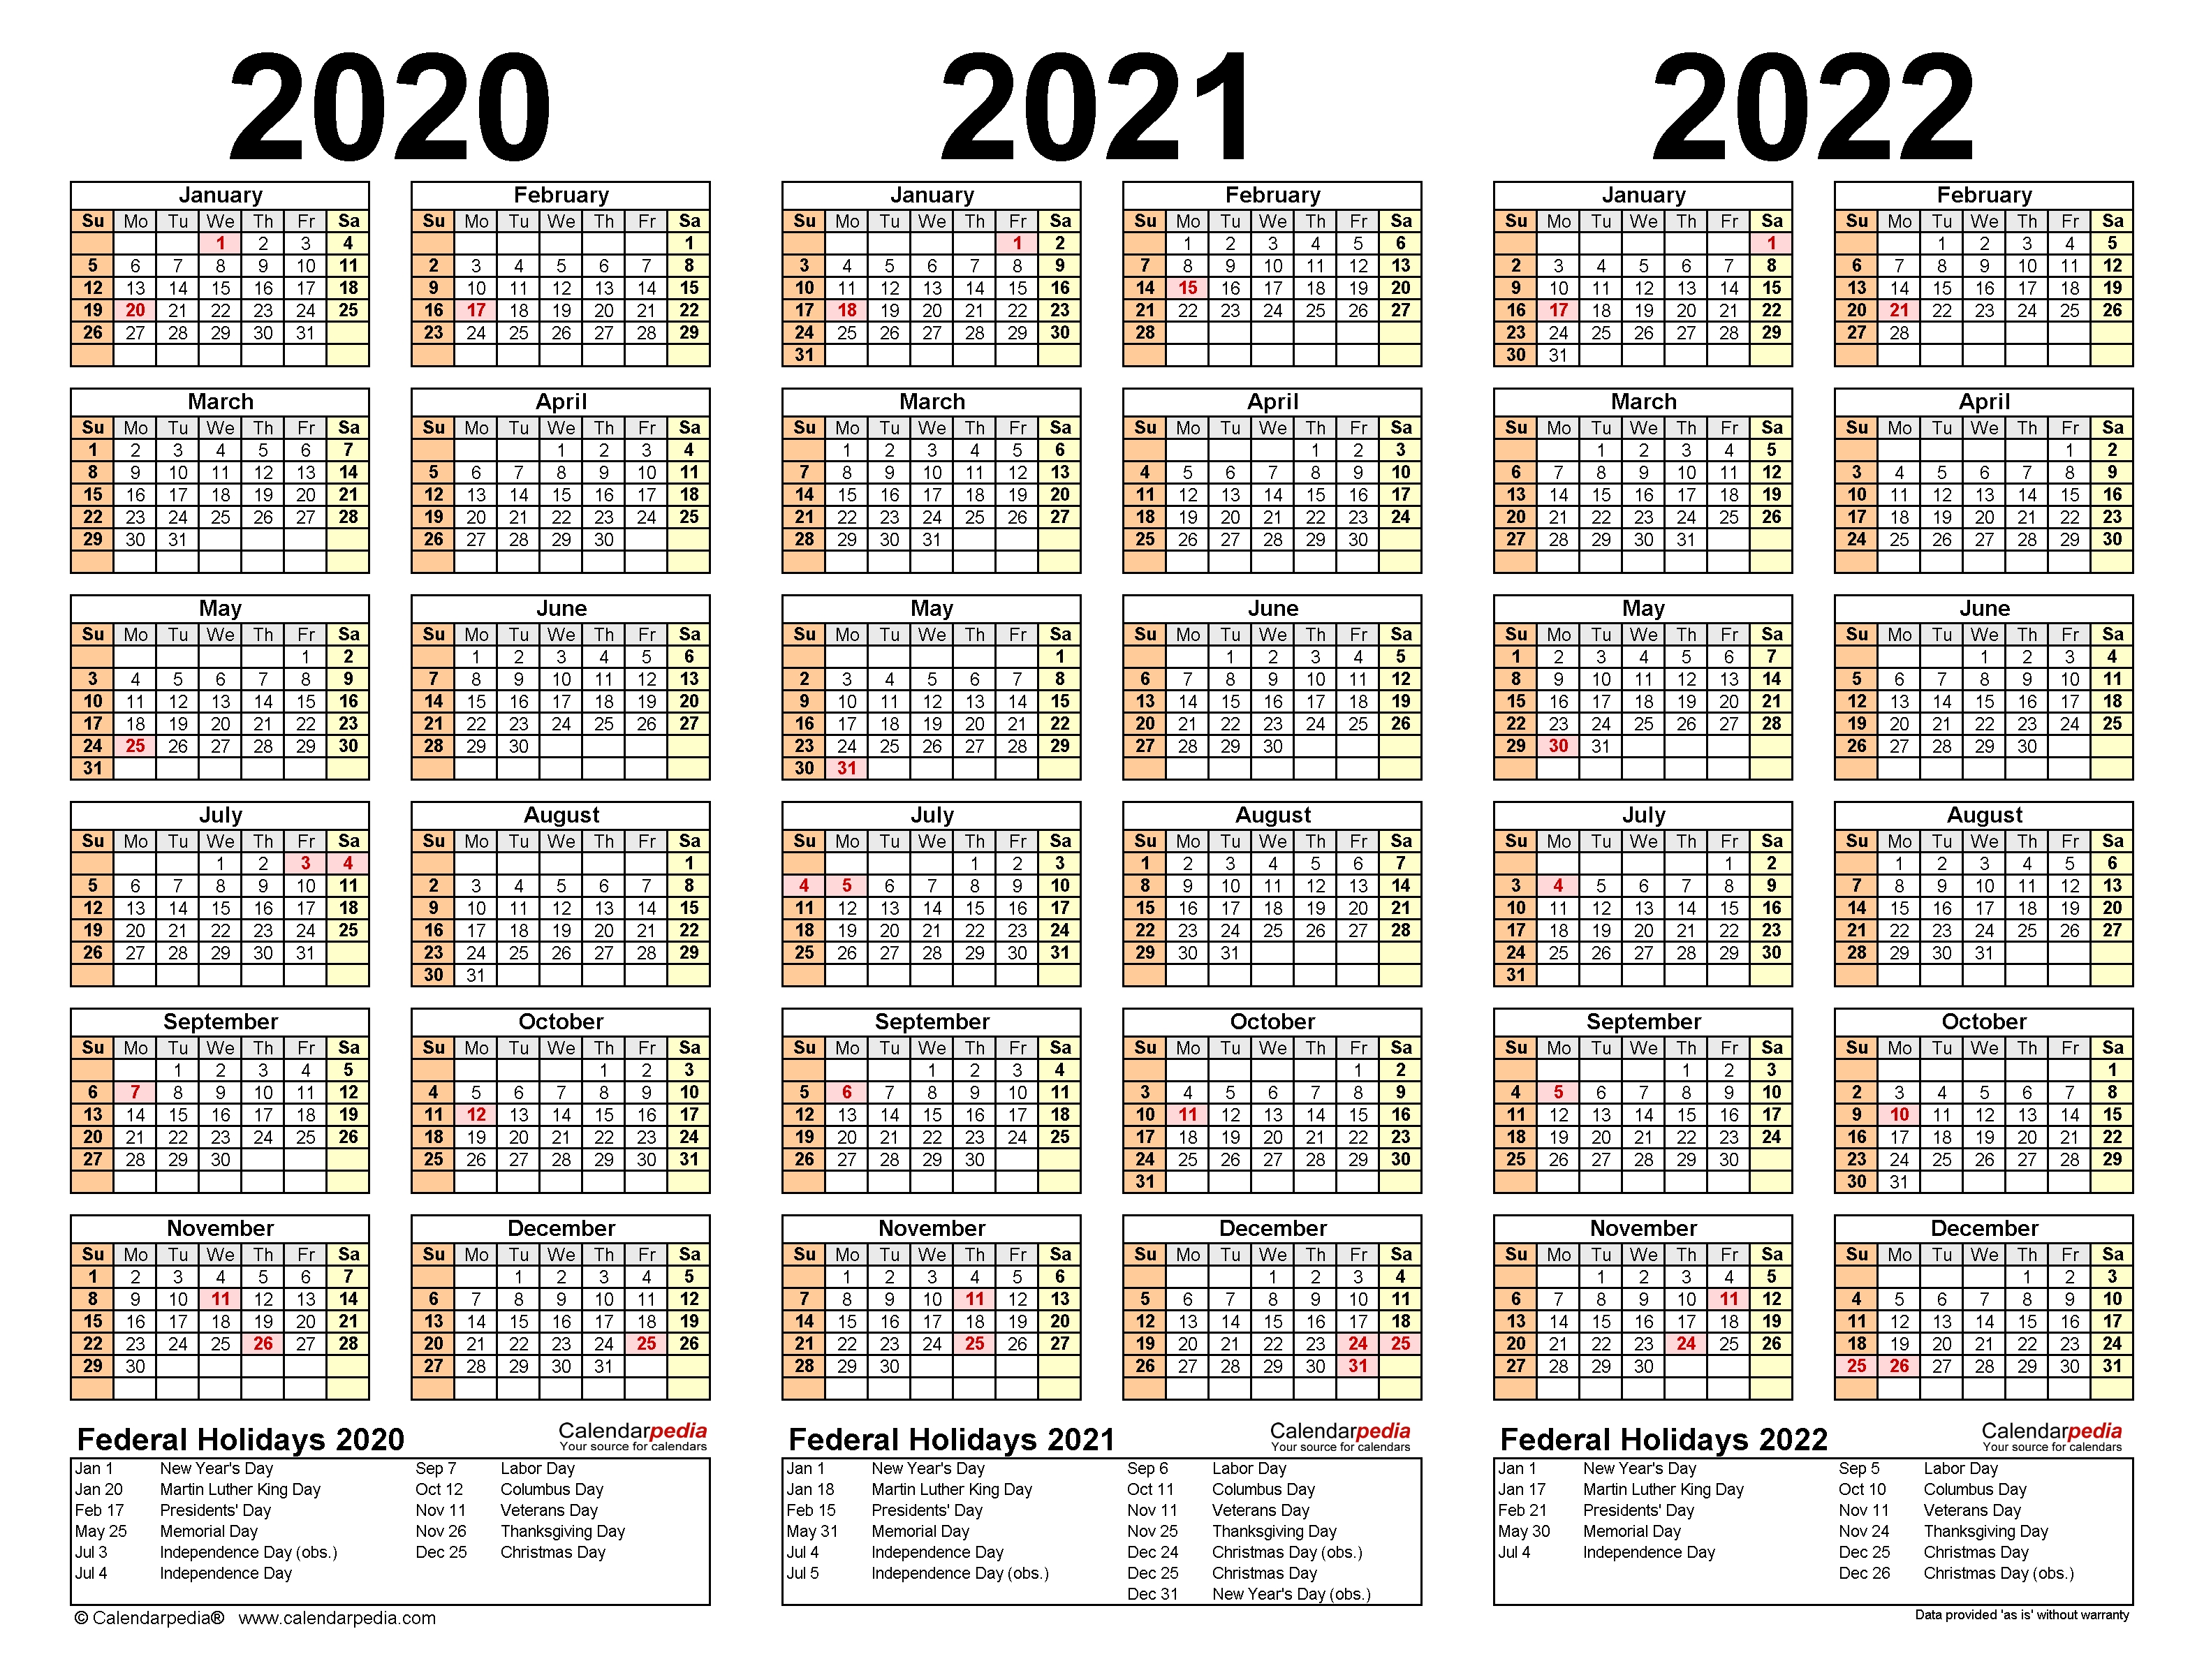 Calendars In 2020 2021 And 2022 - Calendar Inspiration Design